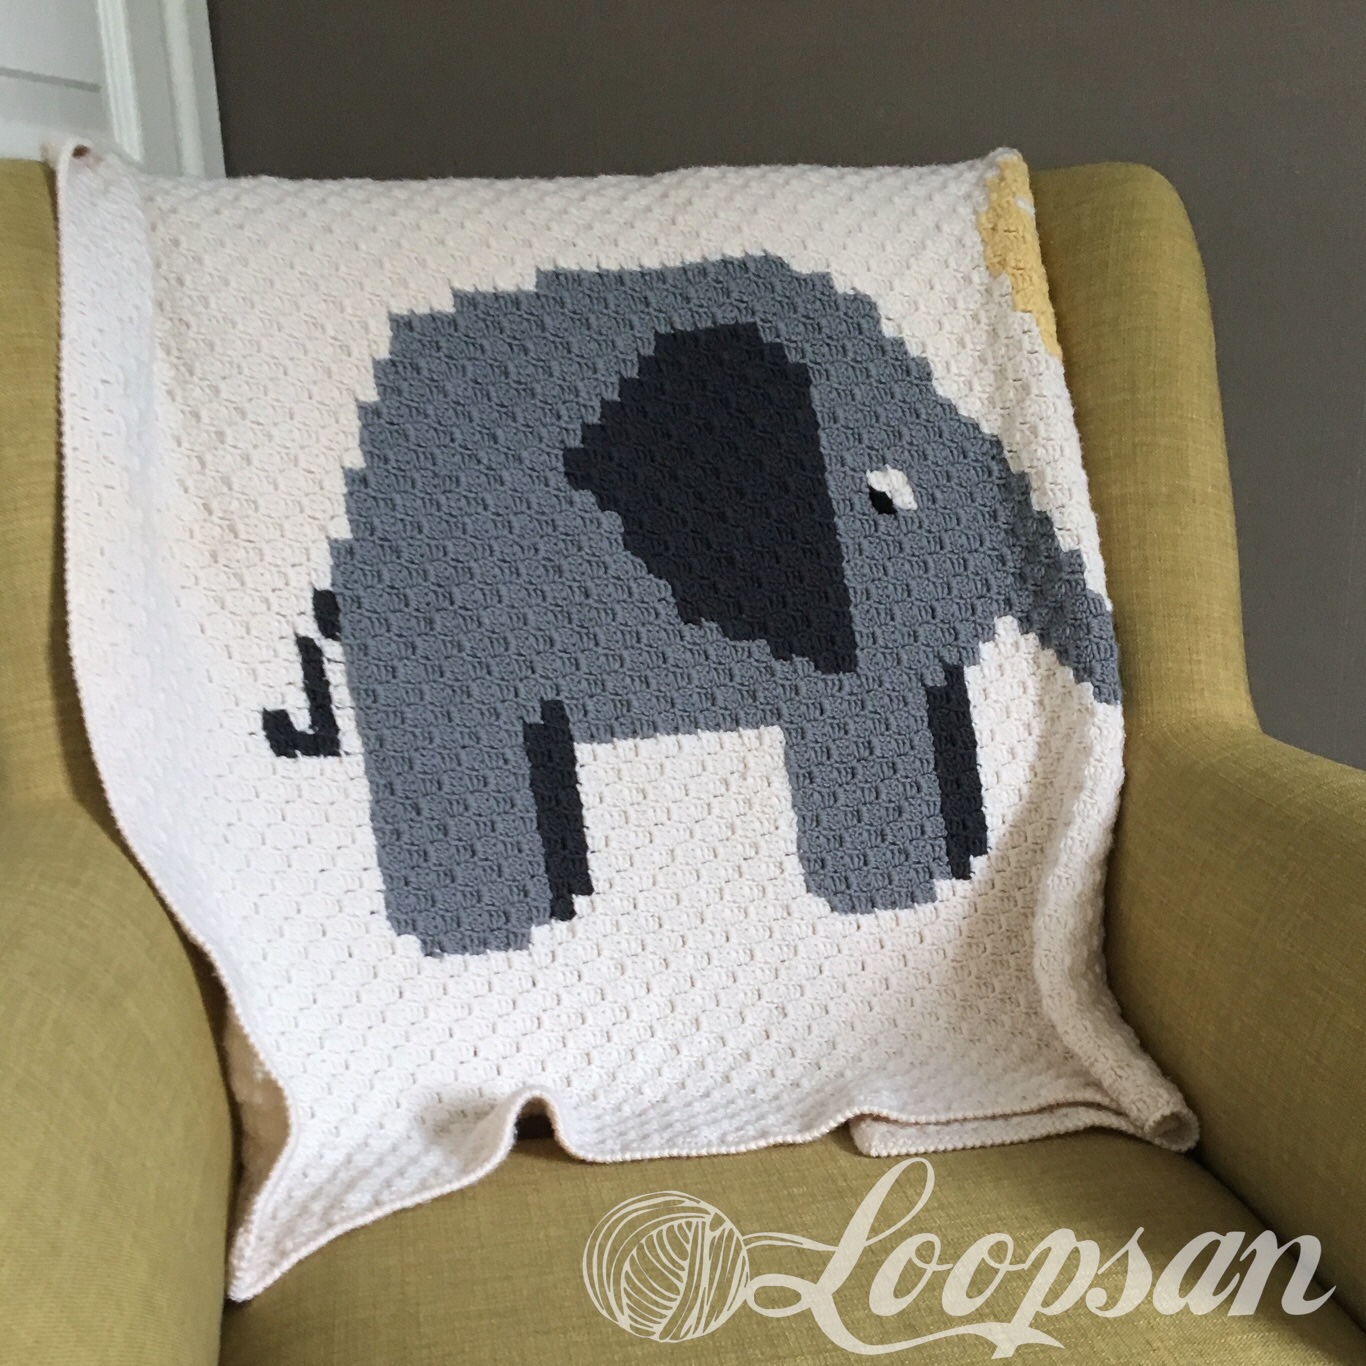 Ellen the Elephant Blanket